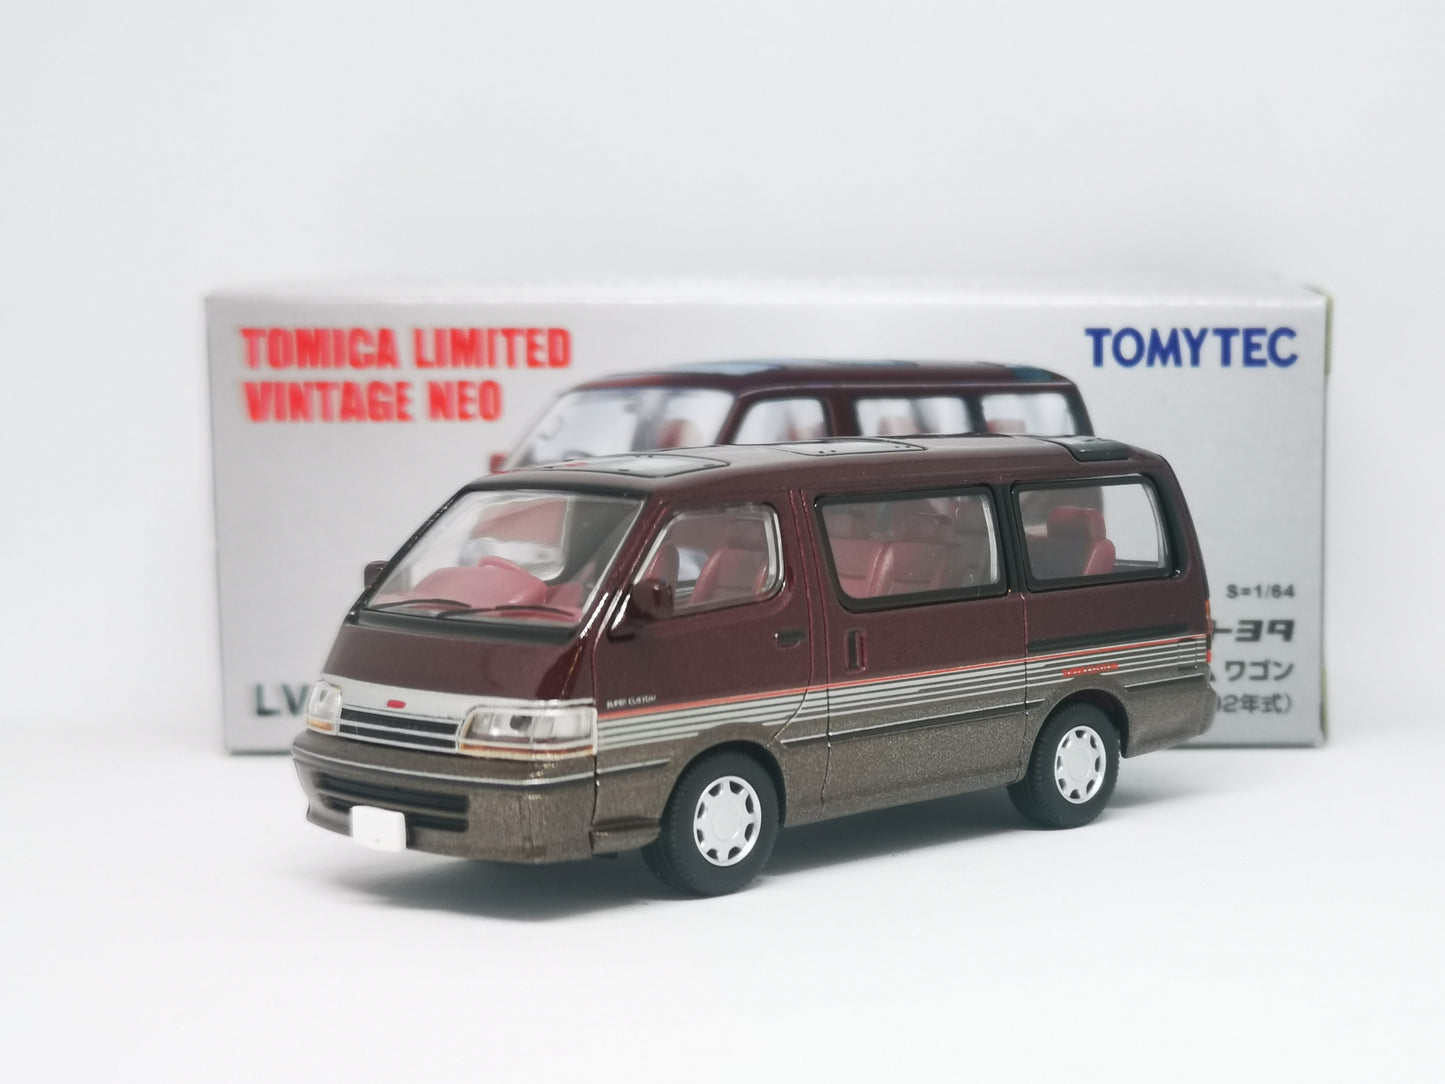 Tomica Limited Vintage Neo LV-N208b Toyota Hiace Wagon Super Custom 92 Model (Dark Red / Brown)